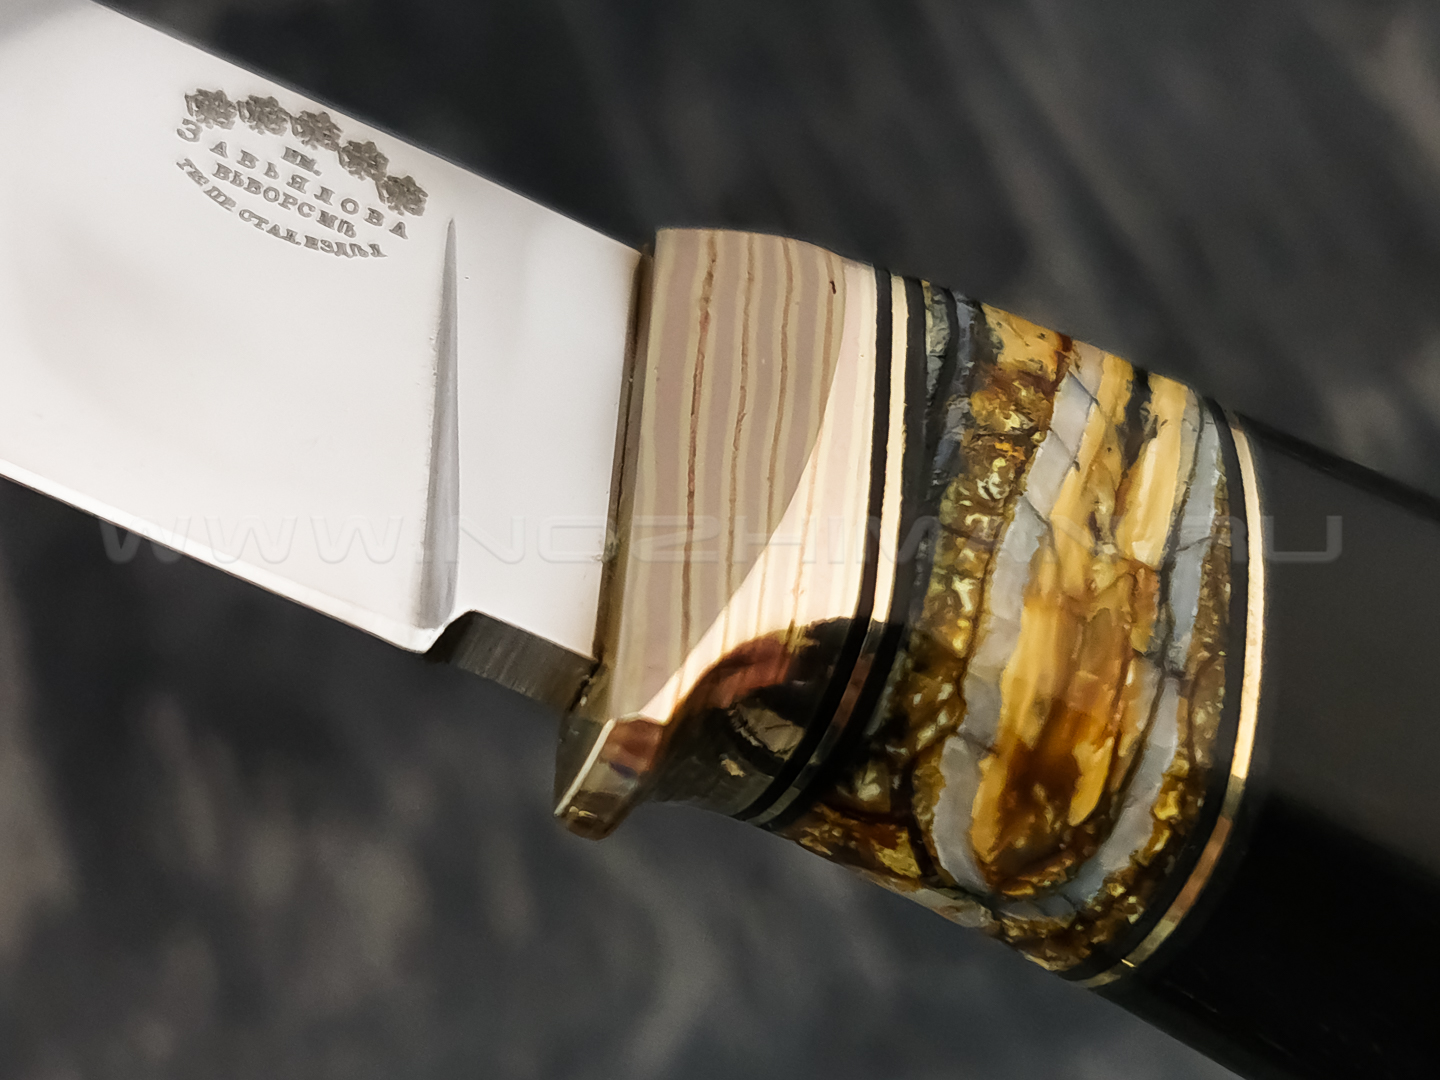 Нож "Ладья-2" сталь CPM 121 Rex, рукоять эбен, зуб мамонта, мокуме гане (Тов. Завьялова)